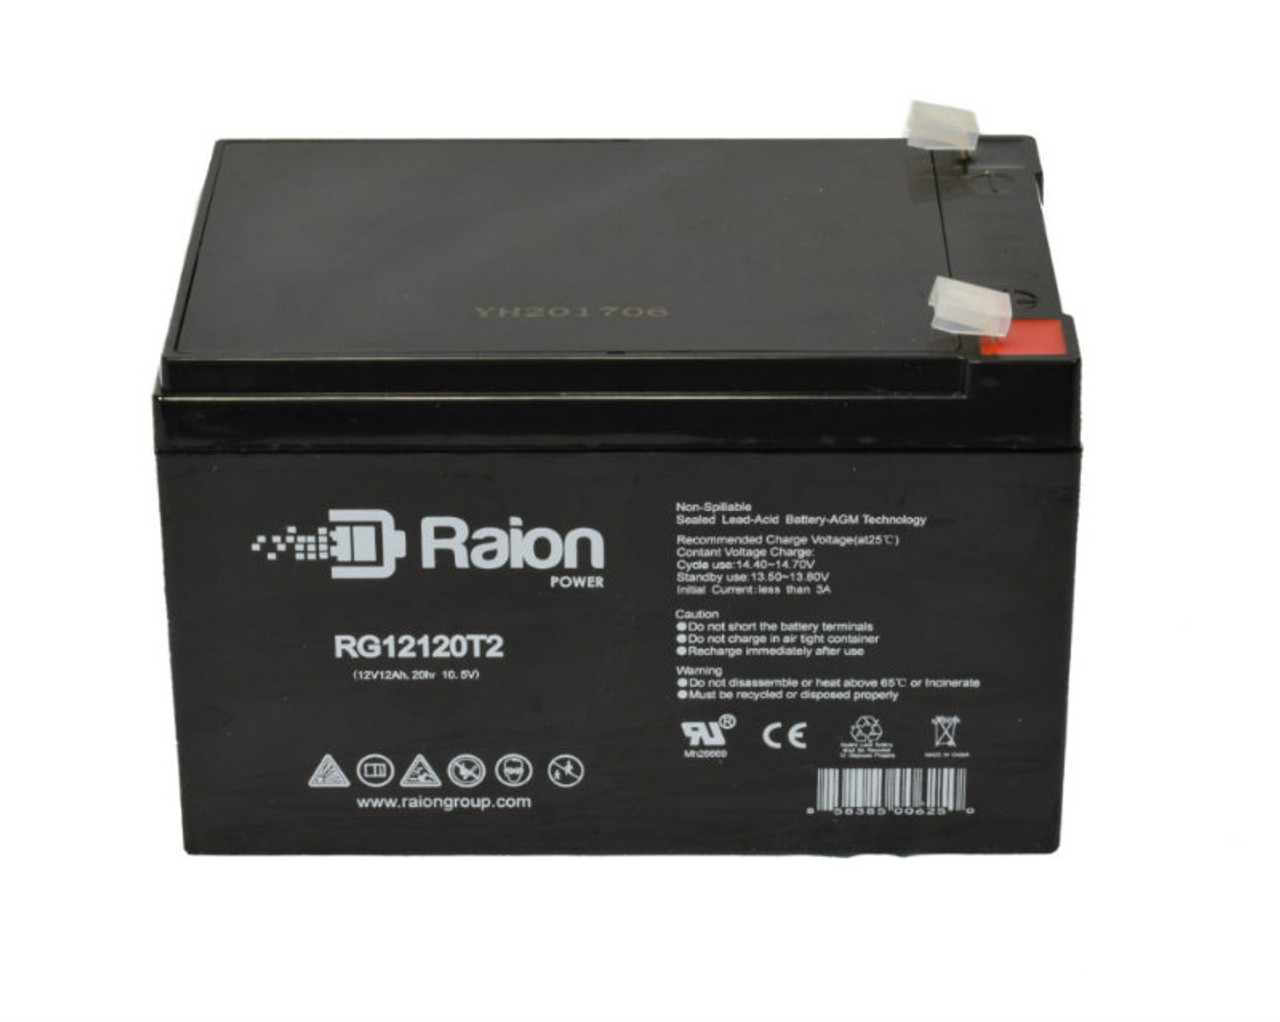 Raion Power RG12120T2 SLA Battery for Shaoxing Huitong 6-DW-12